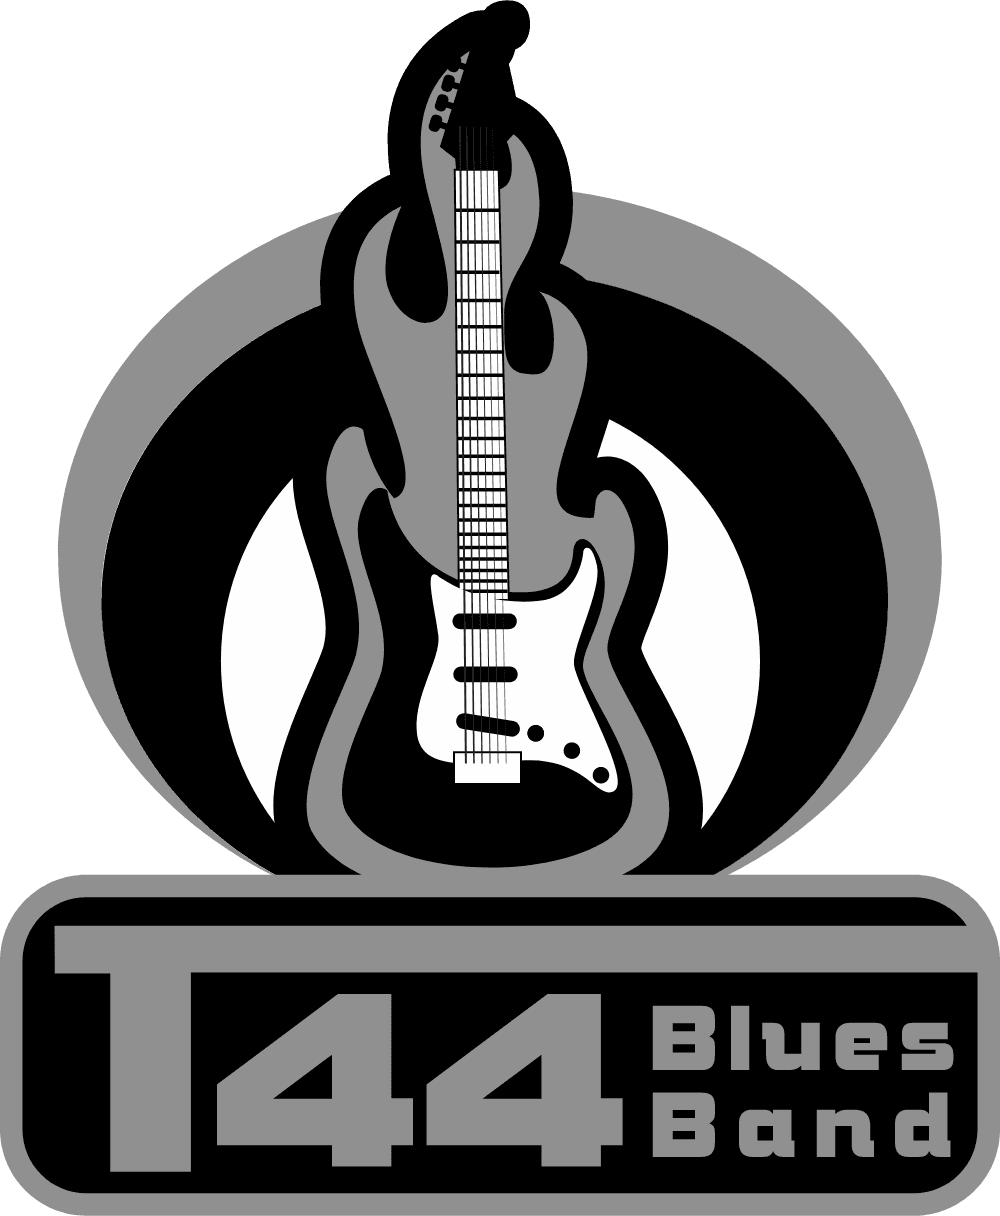 T44 Blues Band Logo download